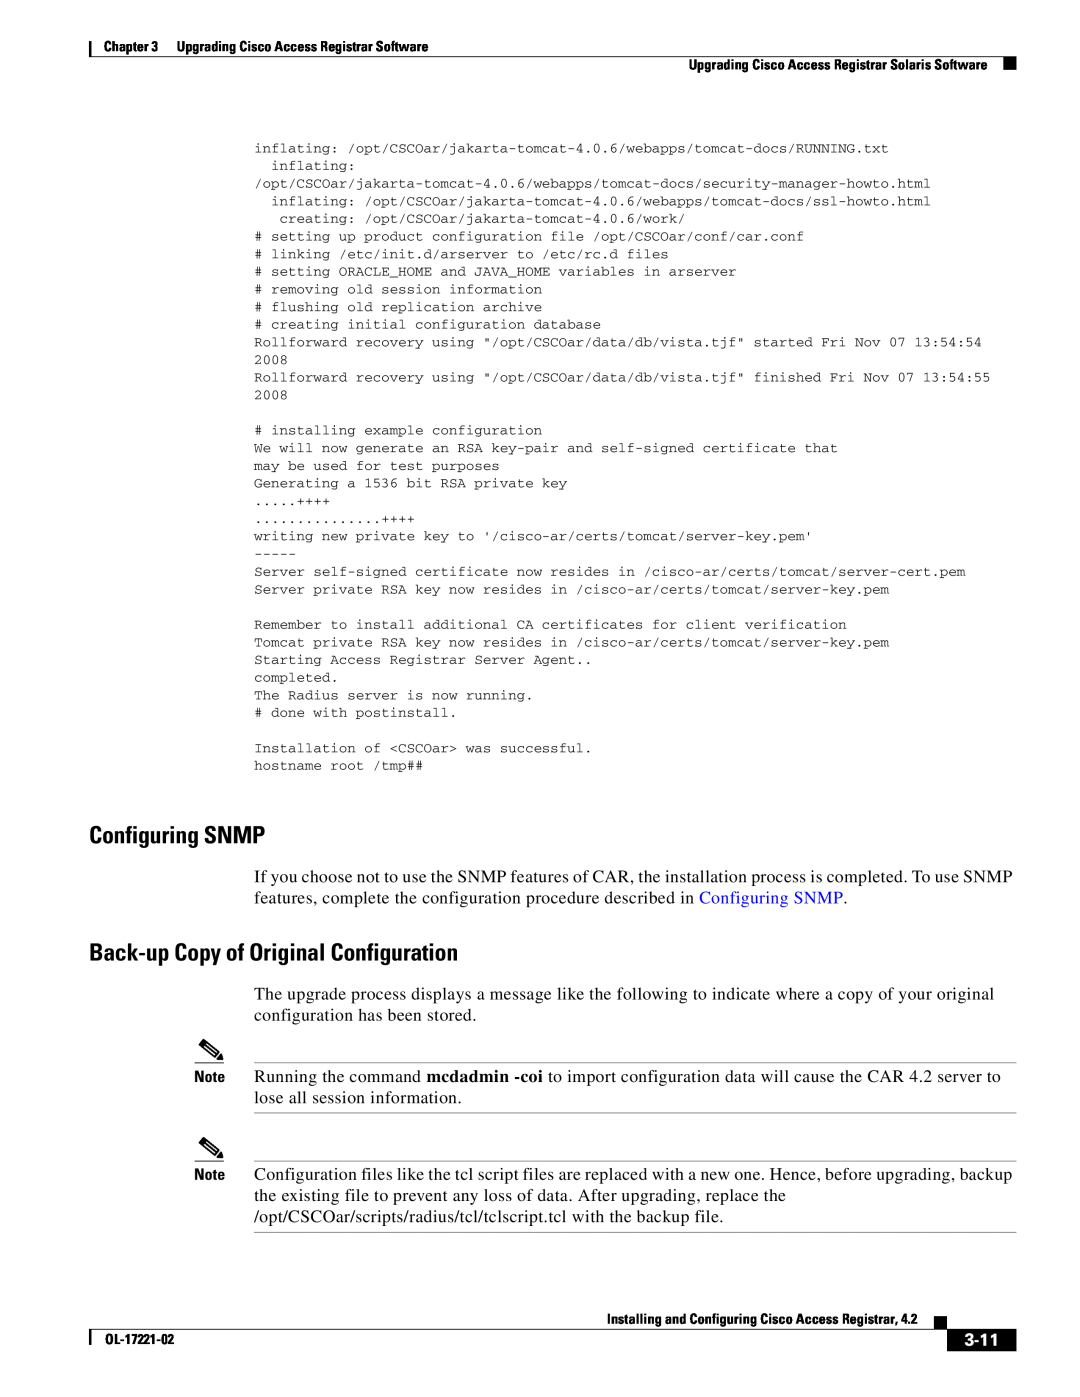 Cisco Systems 4.2 manual Back-up Copy of Original Configuration, 3-11, Configuring SNMP 